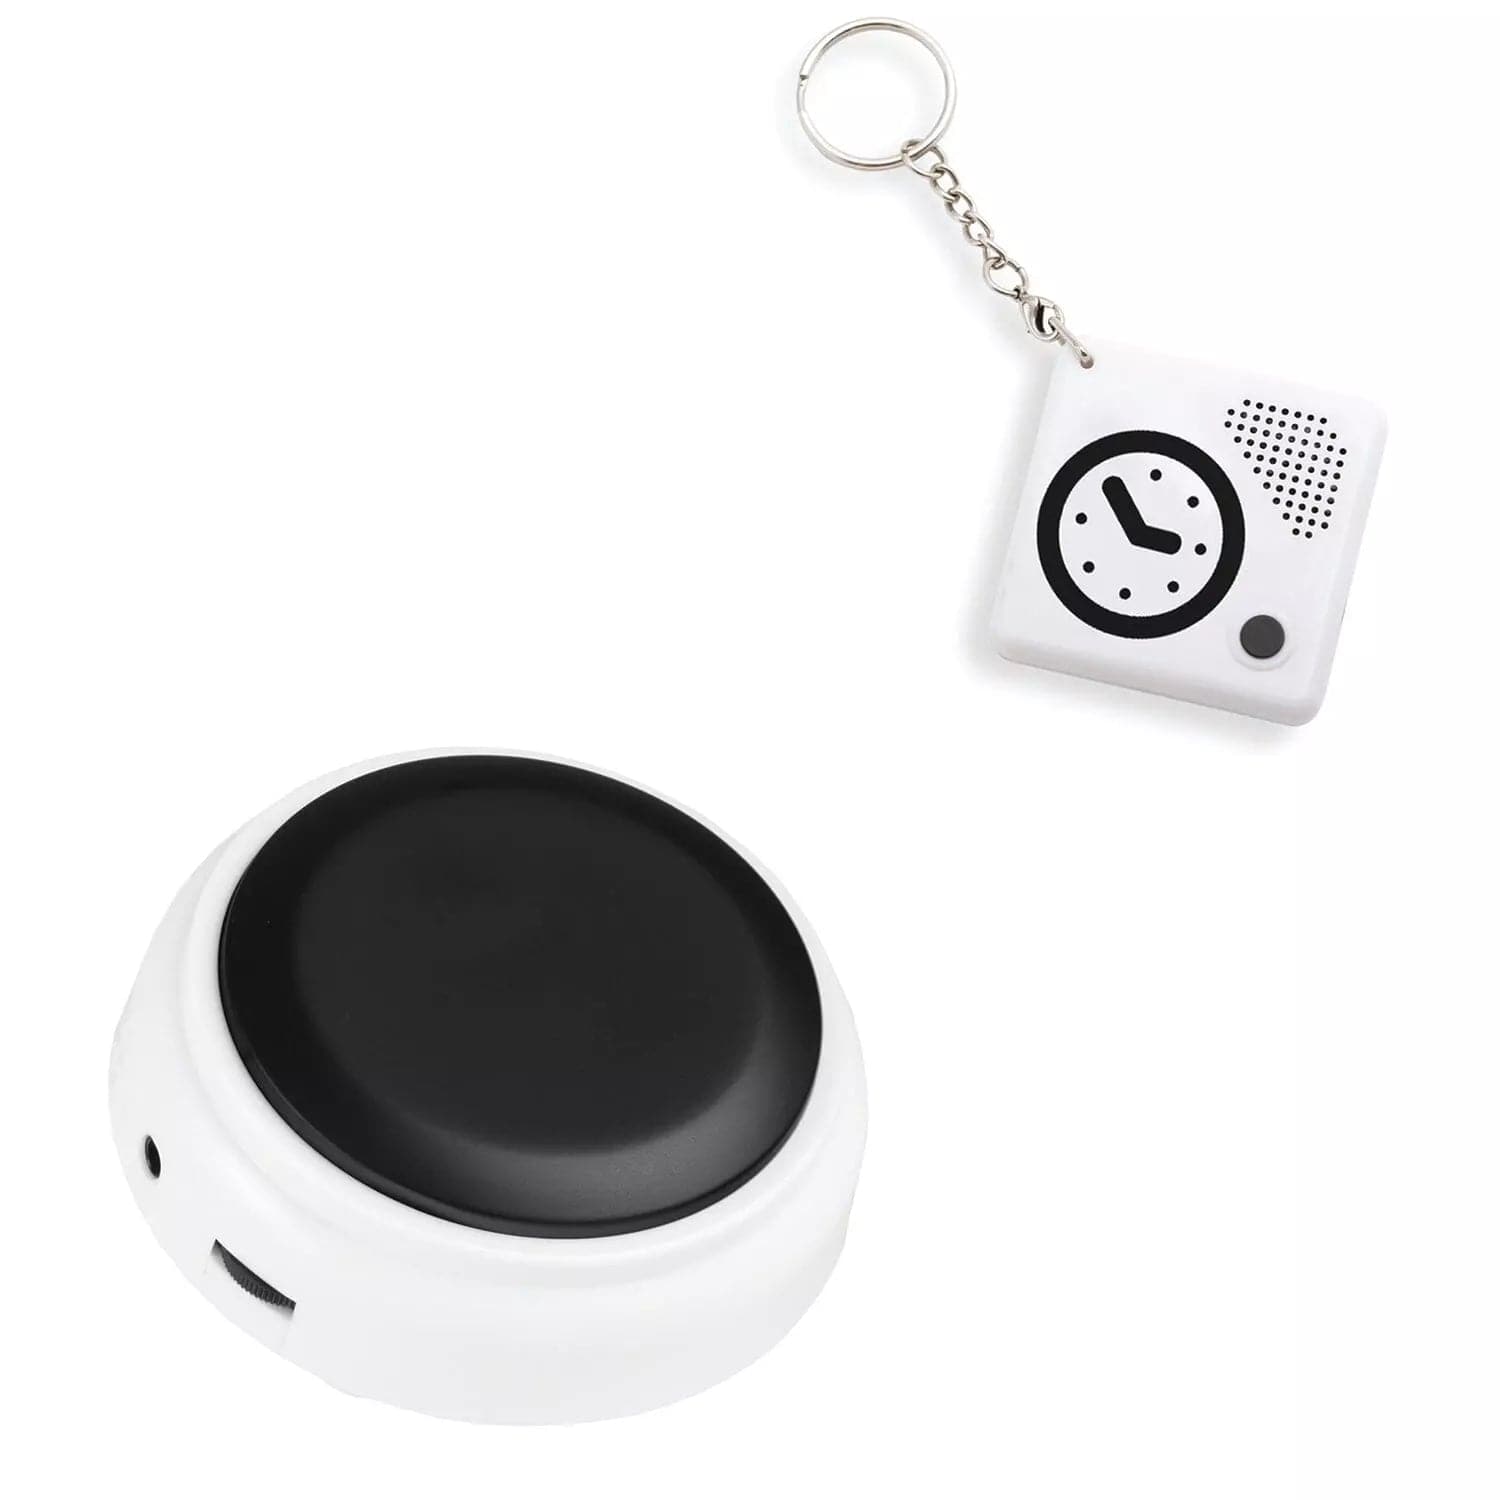 Story & Sons Talking time bundle - Talking button clock and talking key chain clock - VAT free